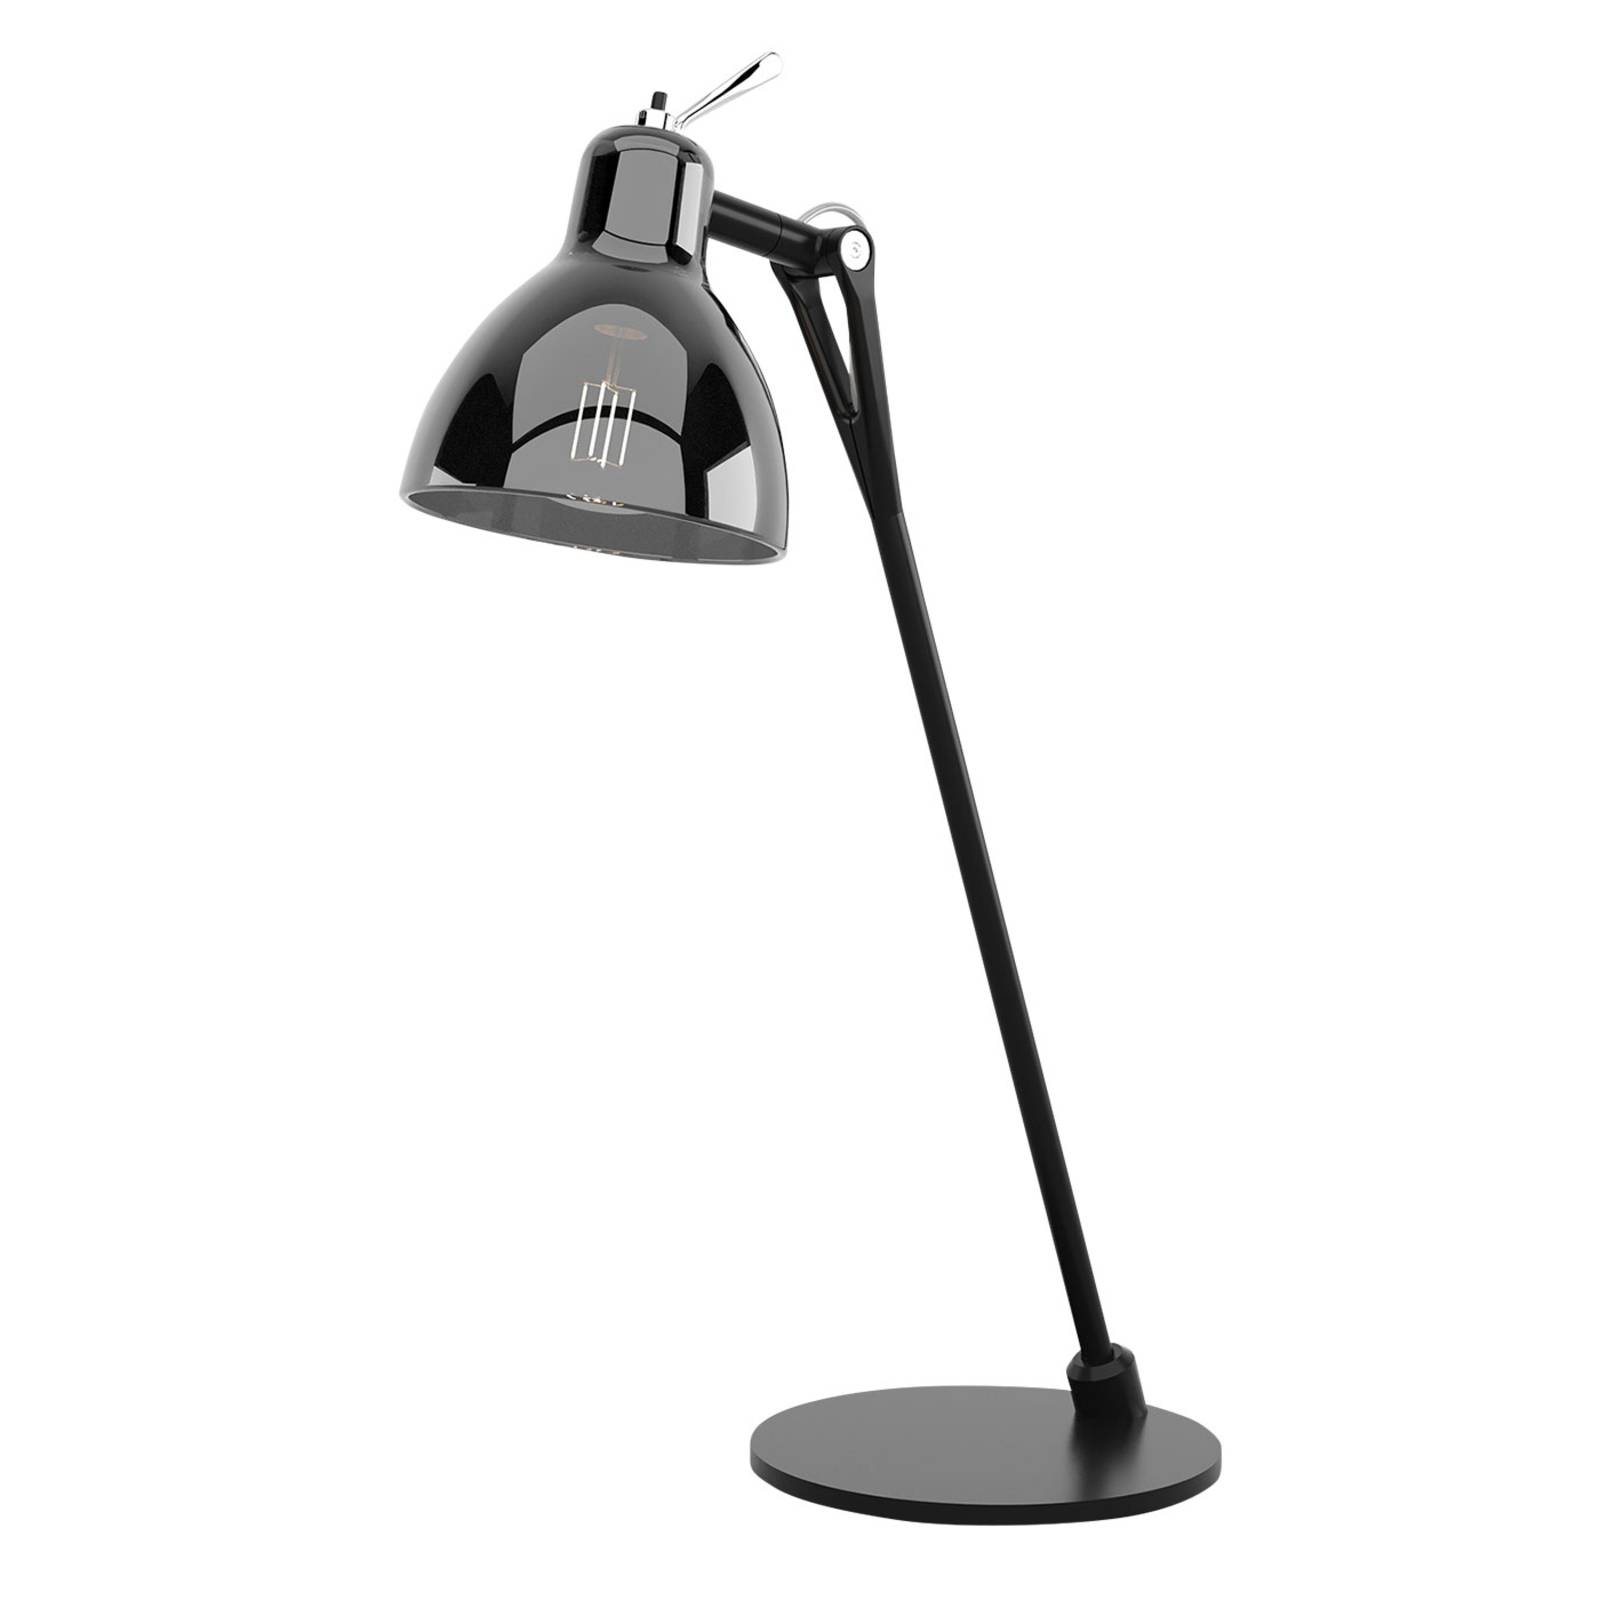 Rotaliana Rotaliana Luxy T0 Glam stolní lampa černá/šedá